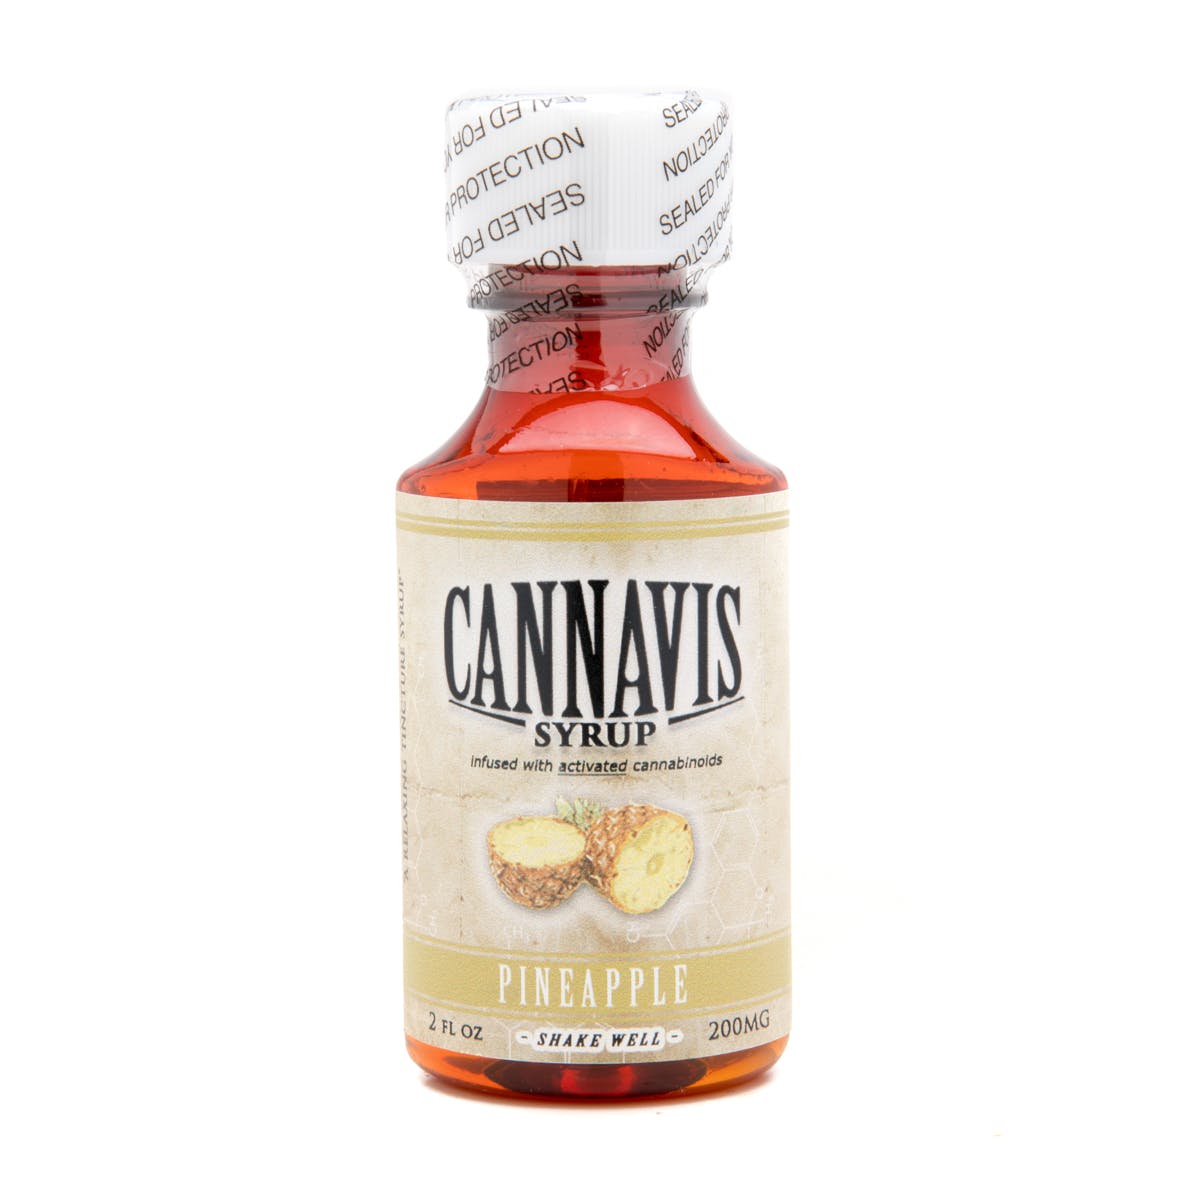 marijuana-dispensaries-crenshaw-church-of-herbs-in-los-angeles-cannavis-syrup-2c-pineapple-200mg